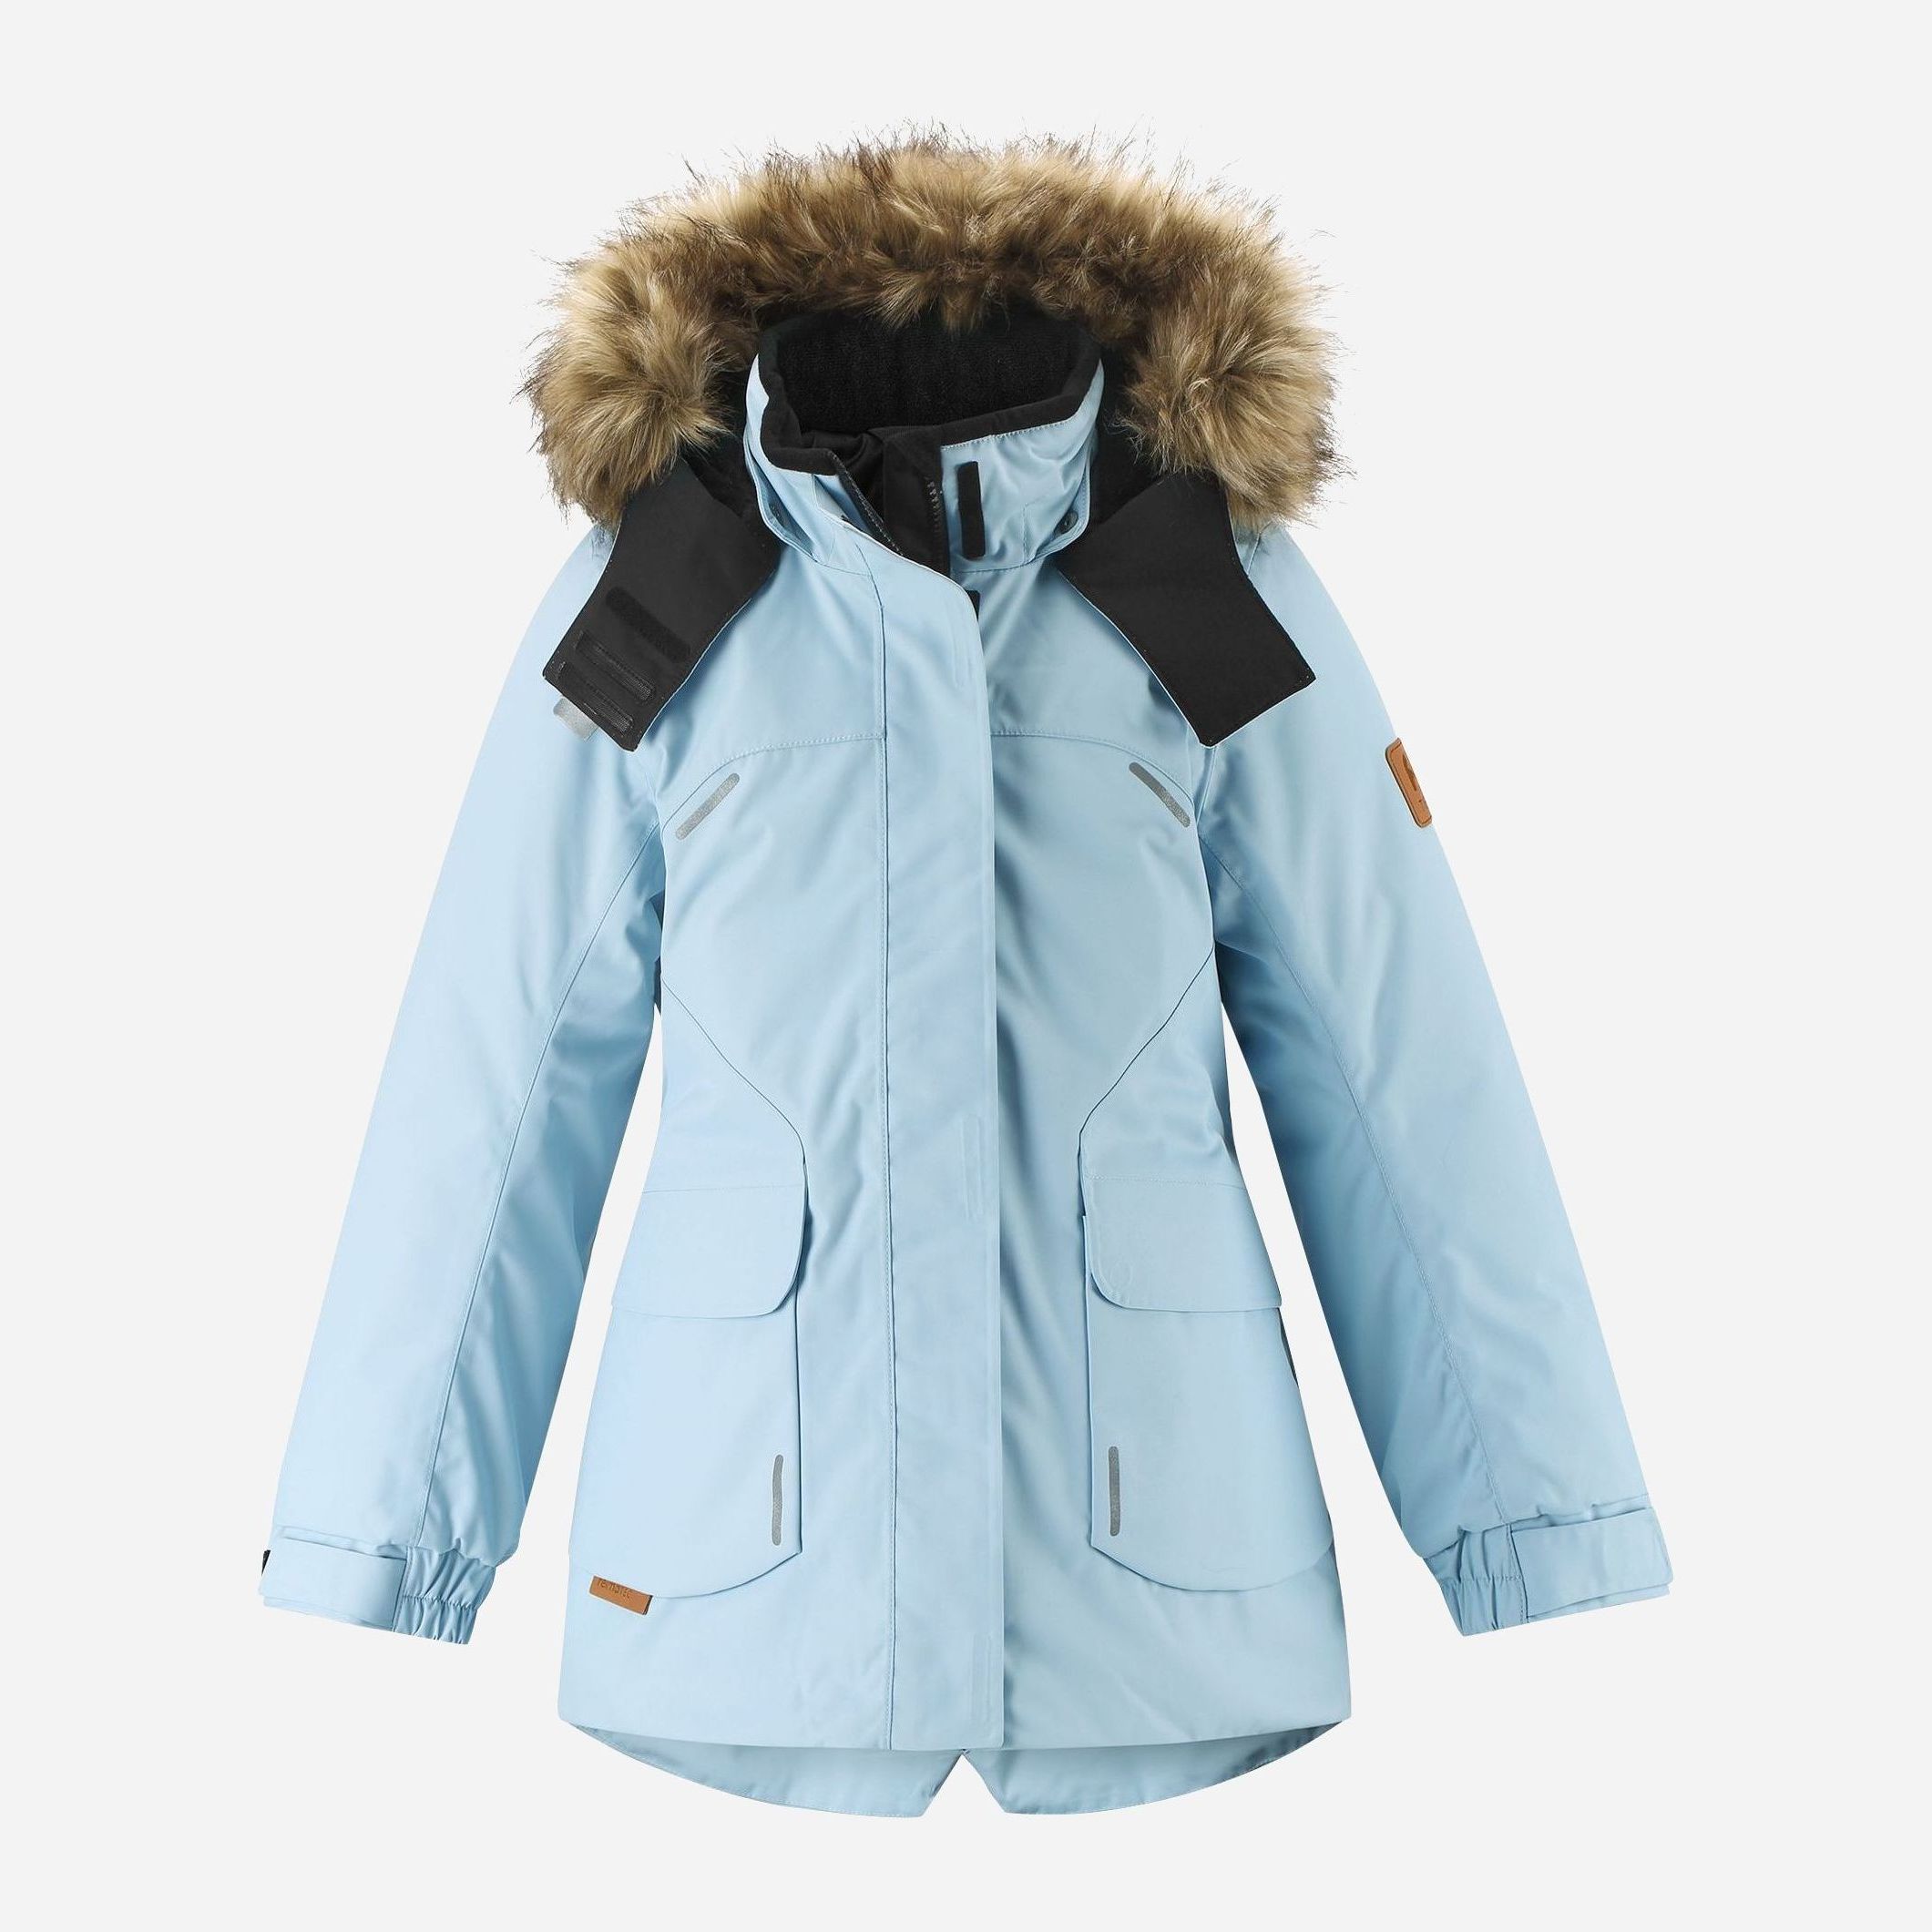 Акция на Дитяча зимова термо куртка-парка для дівчинки Reima Sisarus 531376-6180 110 см от Rozetka